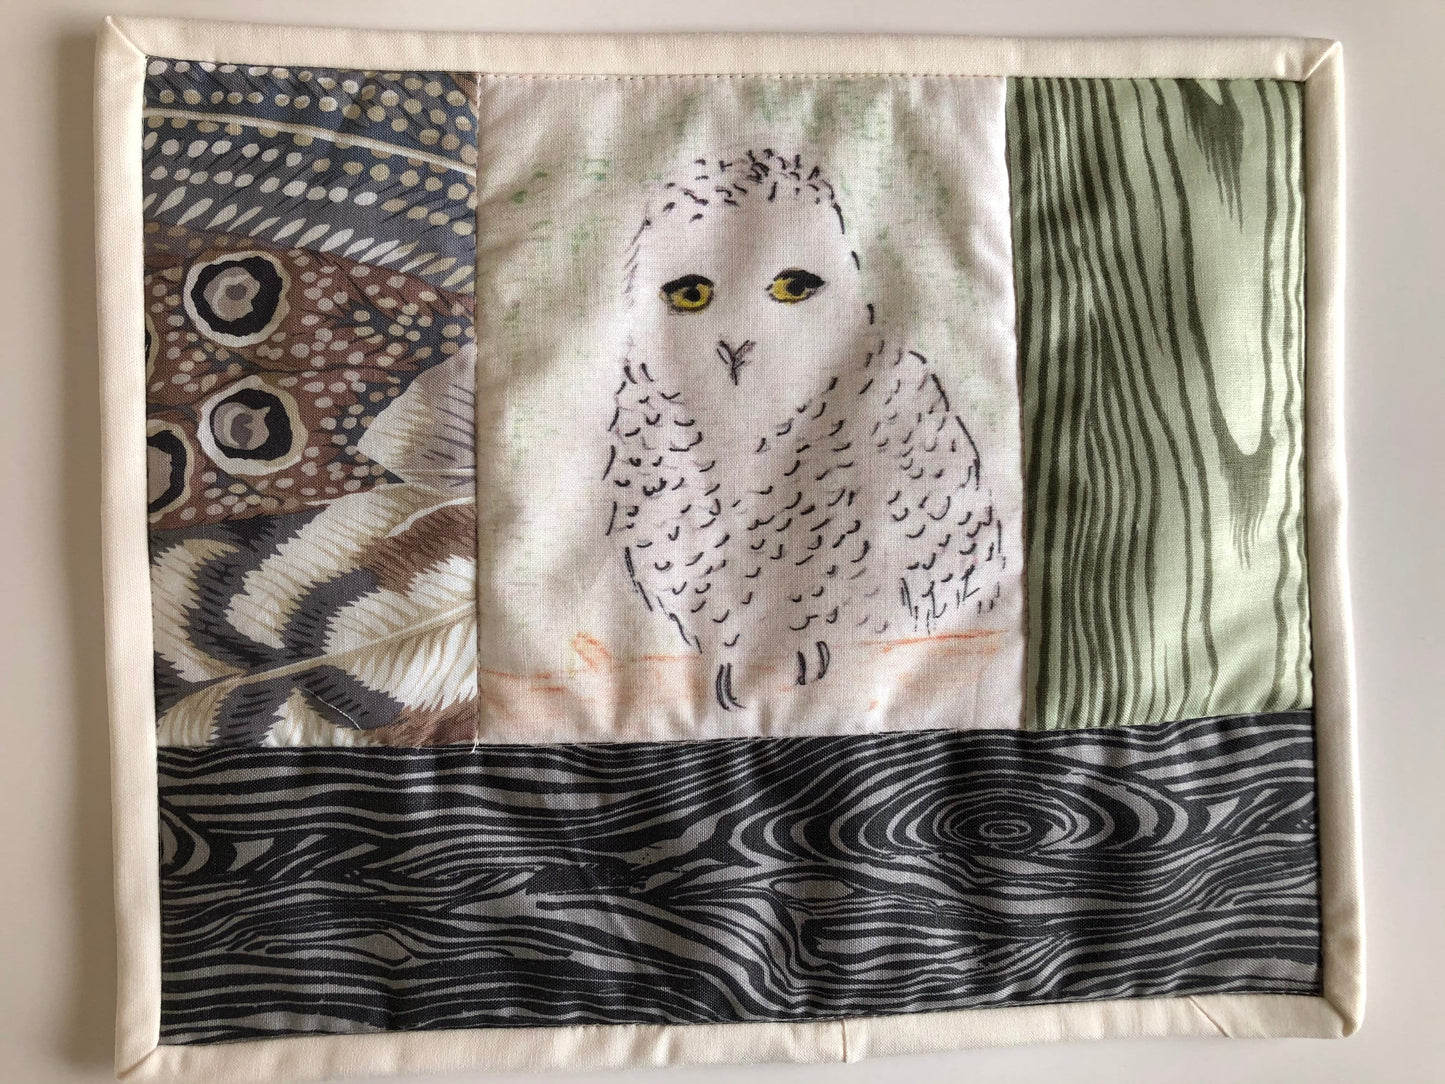 Snowy Owl Mug Rug, Snack Mat, Mini Placemat, Watercolor sketch, mini quilt